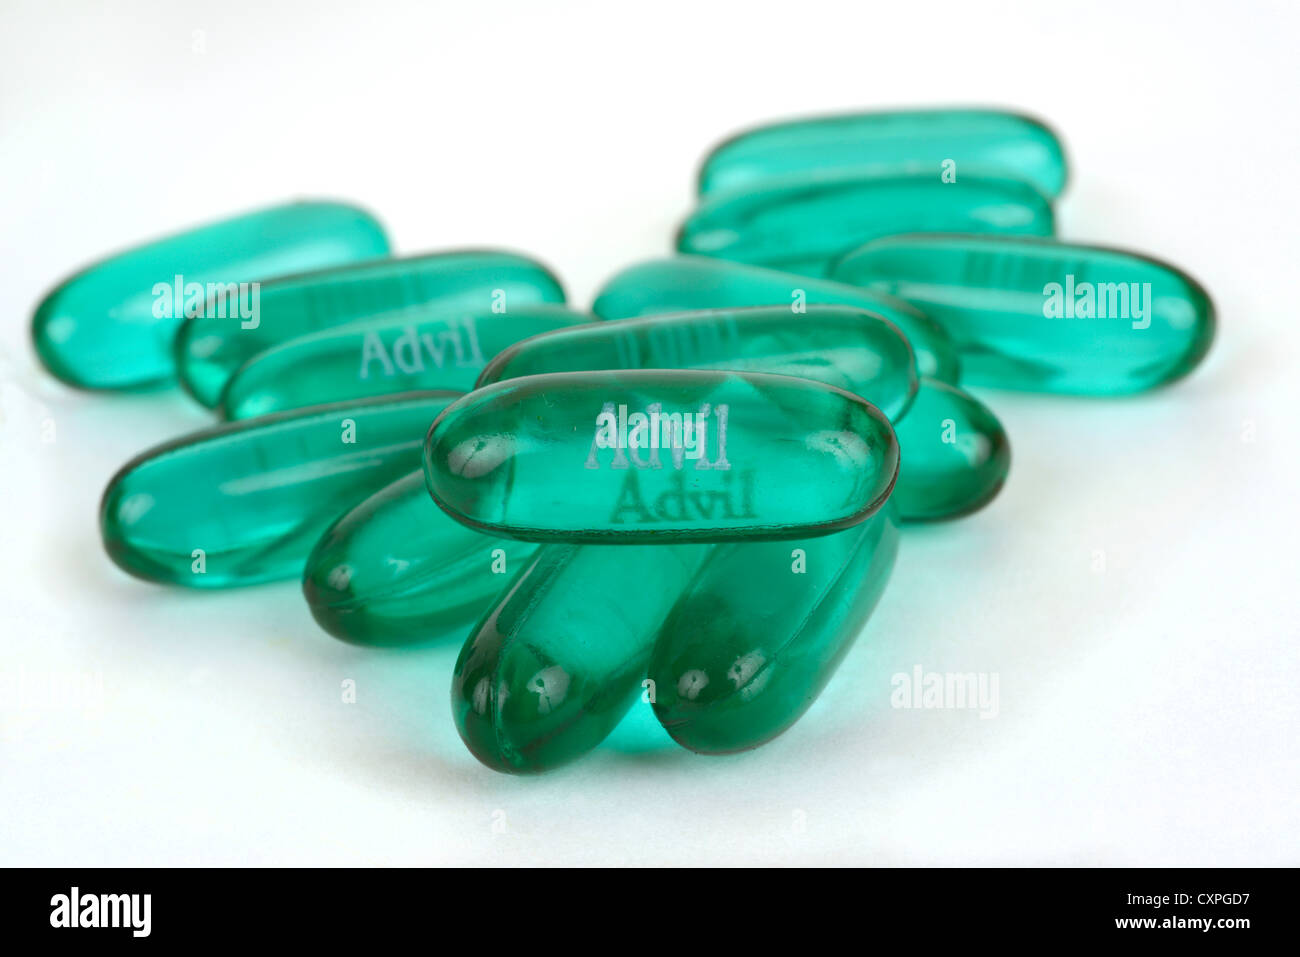 L'Advil gel liquide capsules. Banque D'Images